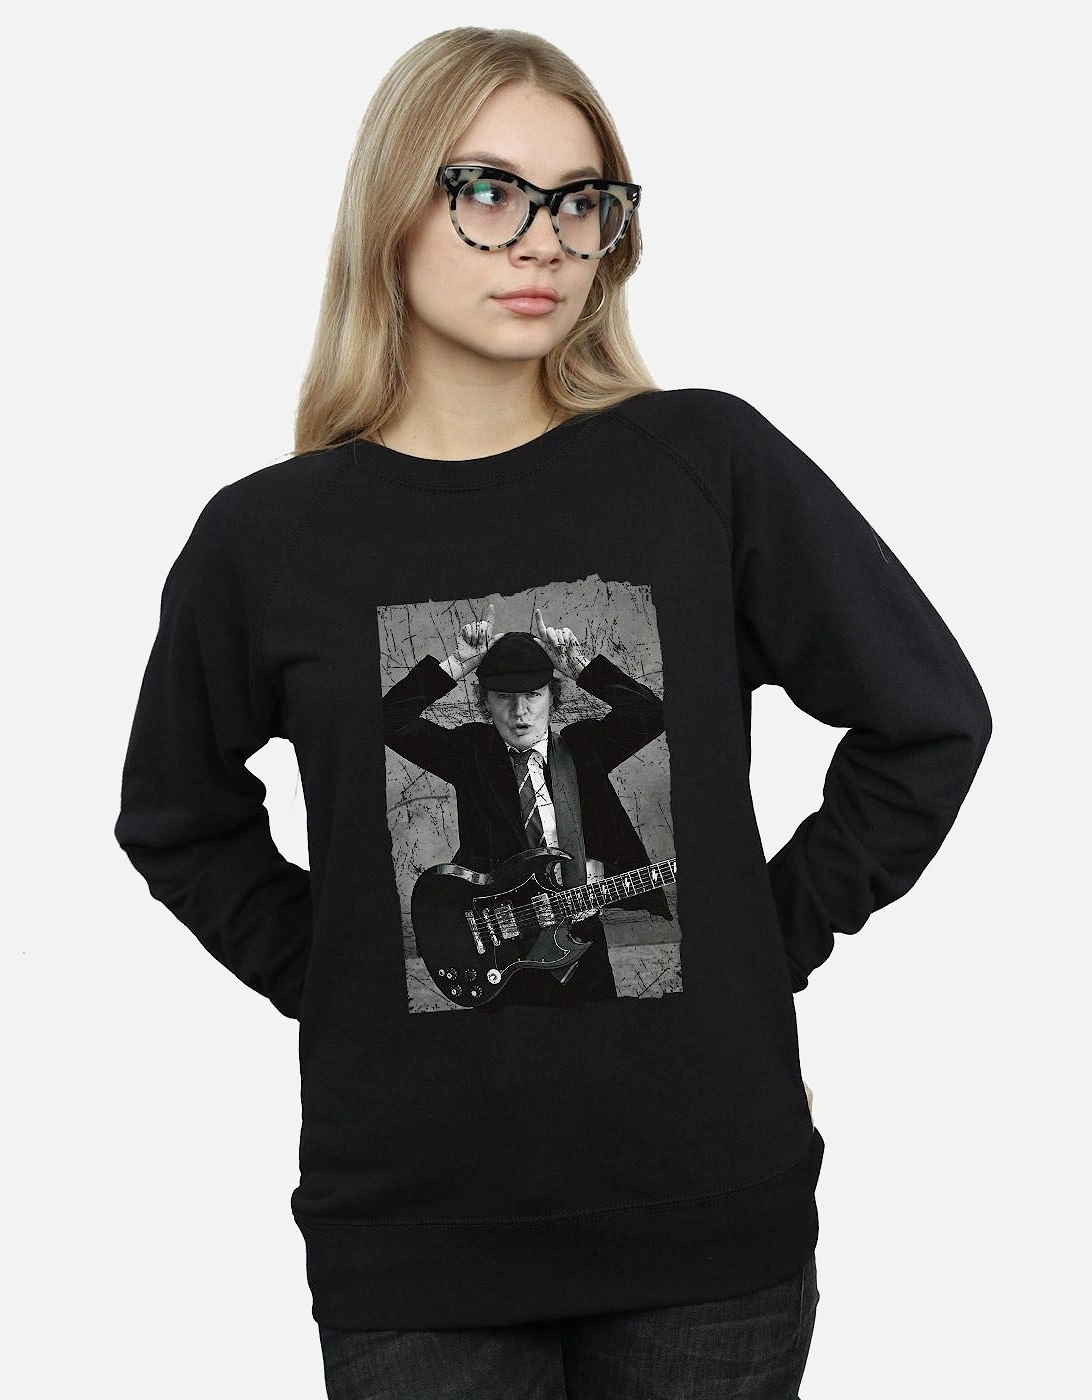 Womens/Ladies Angus Young Distressed Photo Sweatshirt